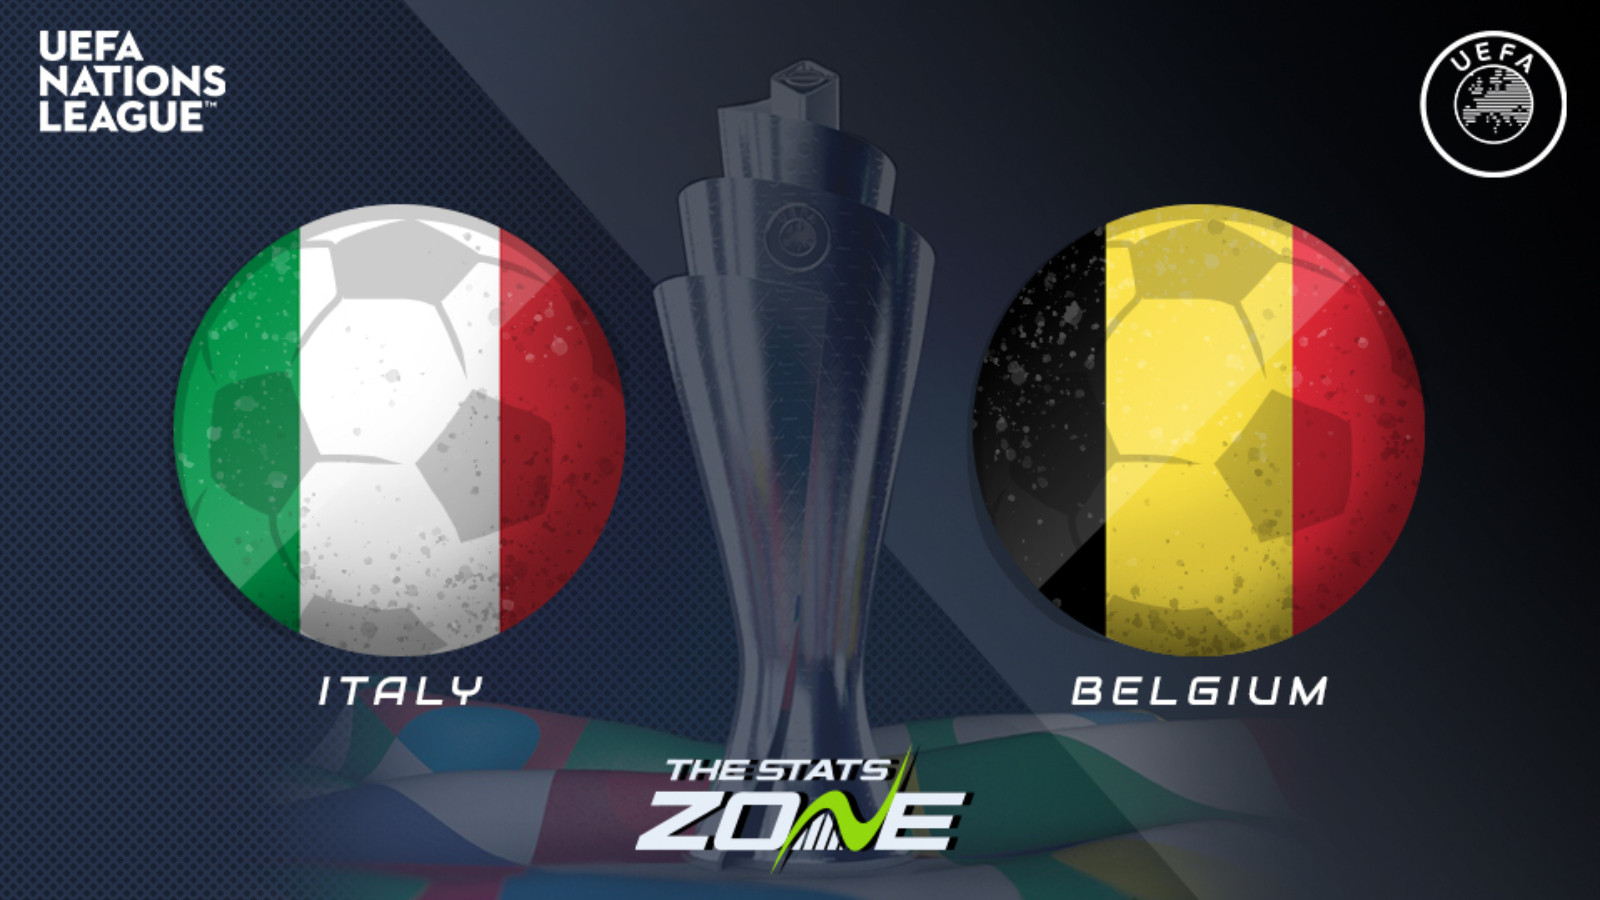 Belgium vs italy prediction